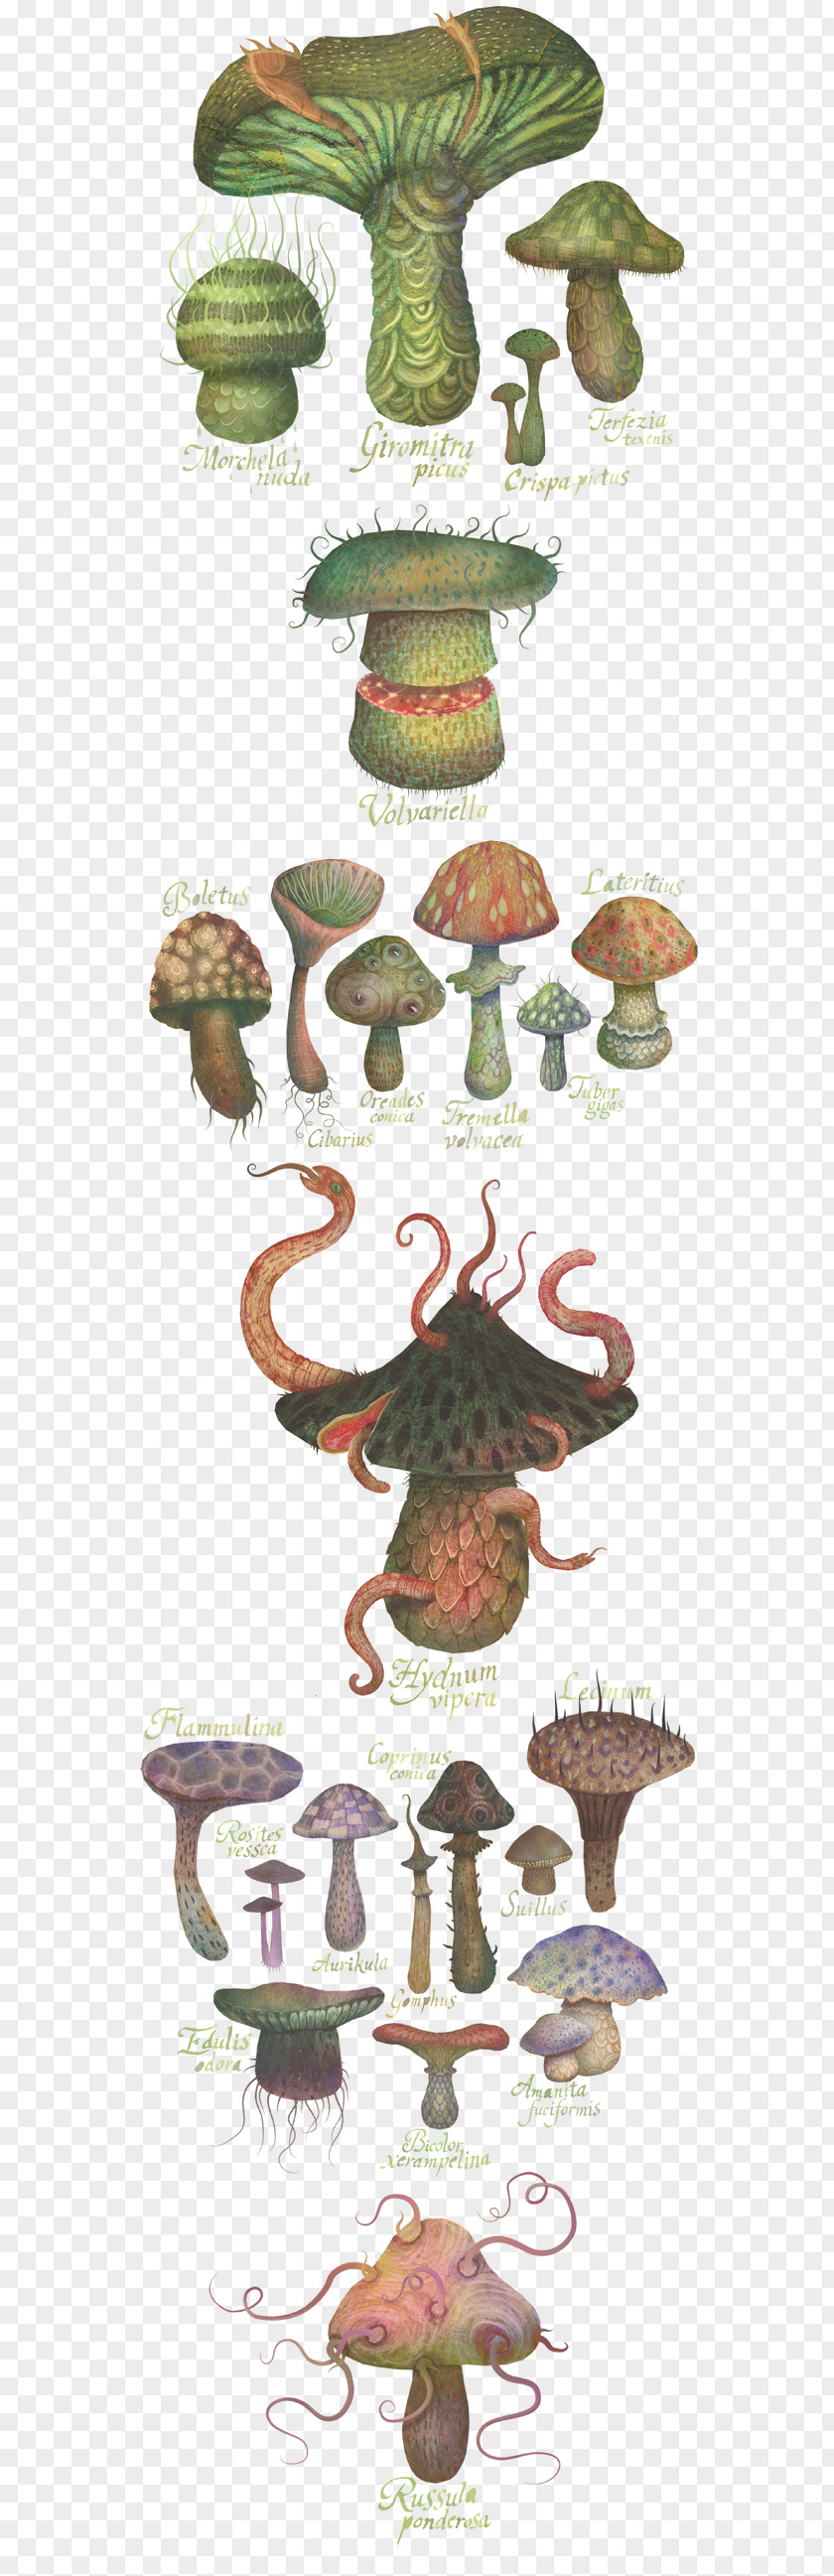 Design Drawing Botanical Illustration The Fungus Kingdom PNG